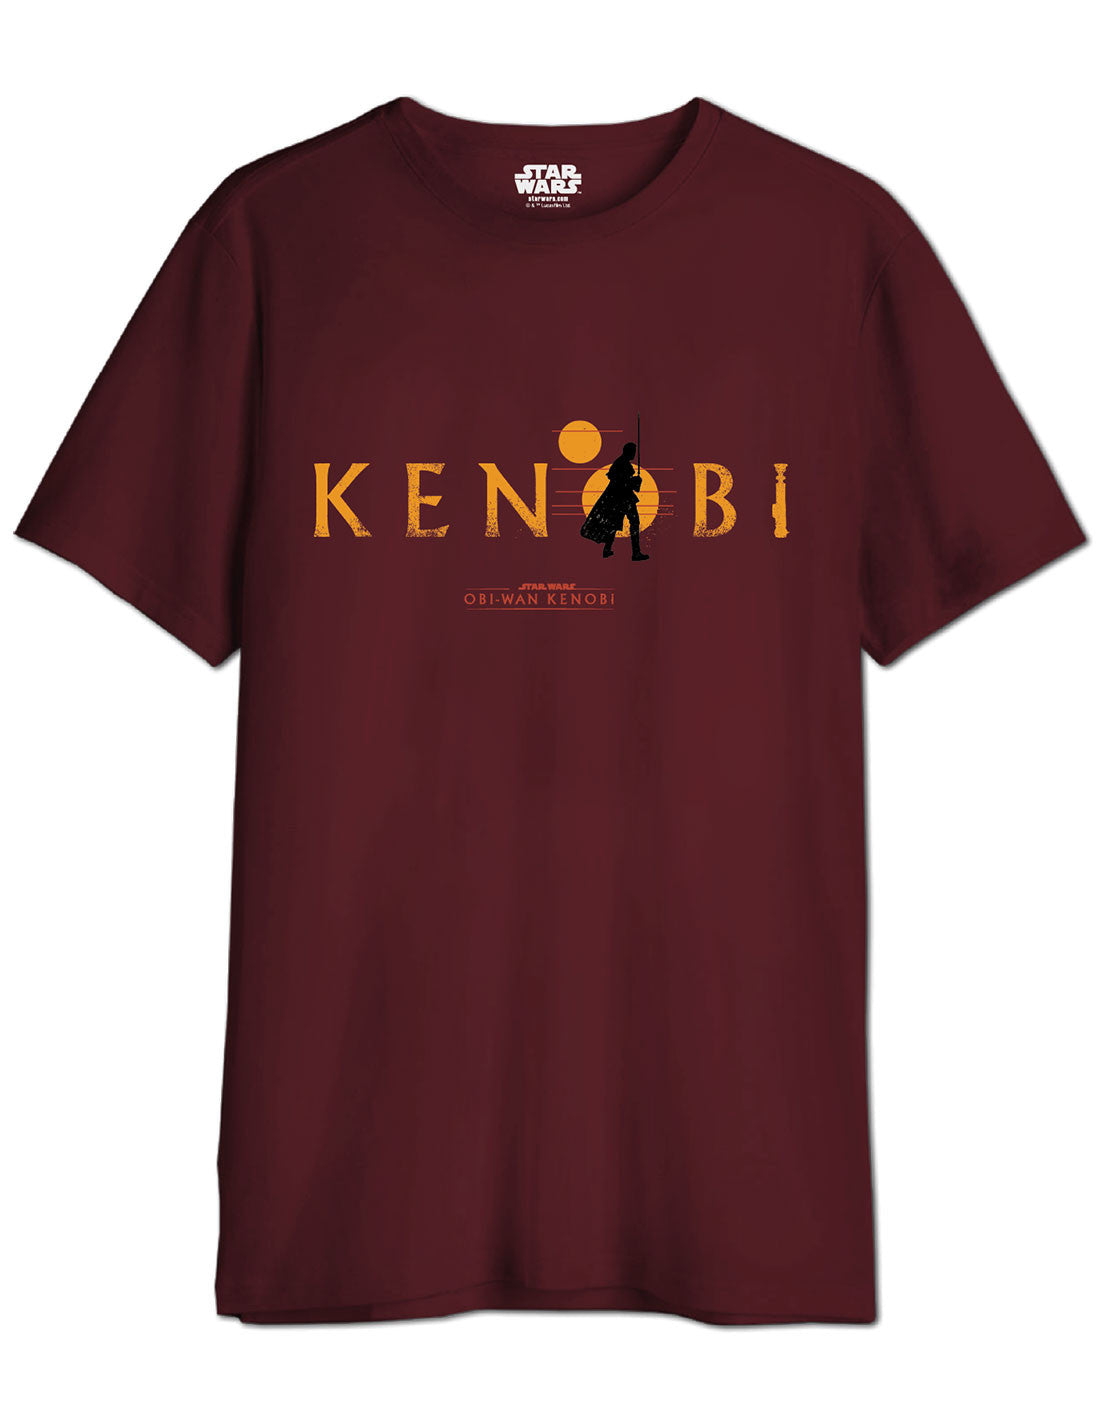 Obi-Wan Kenobi Star Wars T-shirt - Silhouette Logo